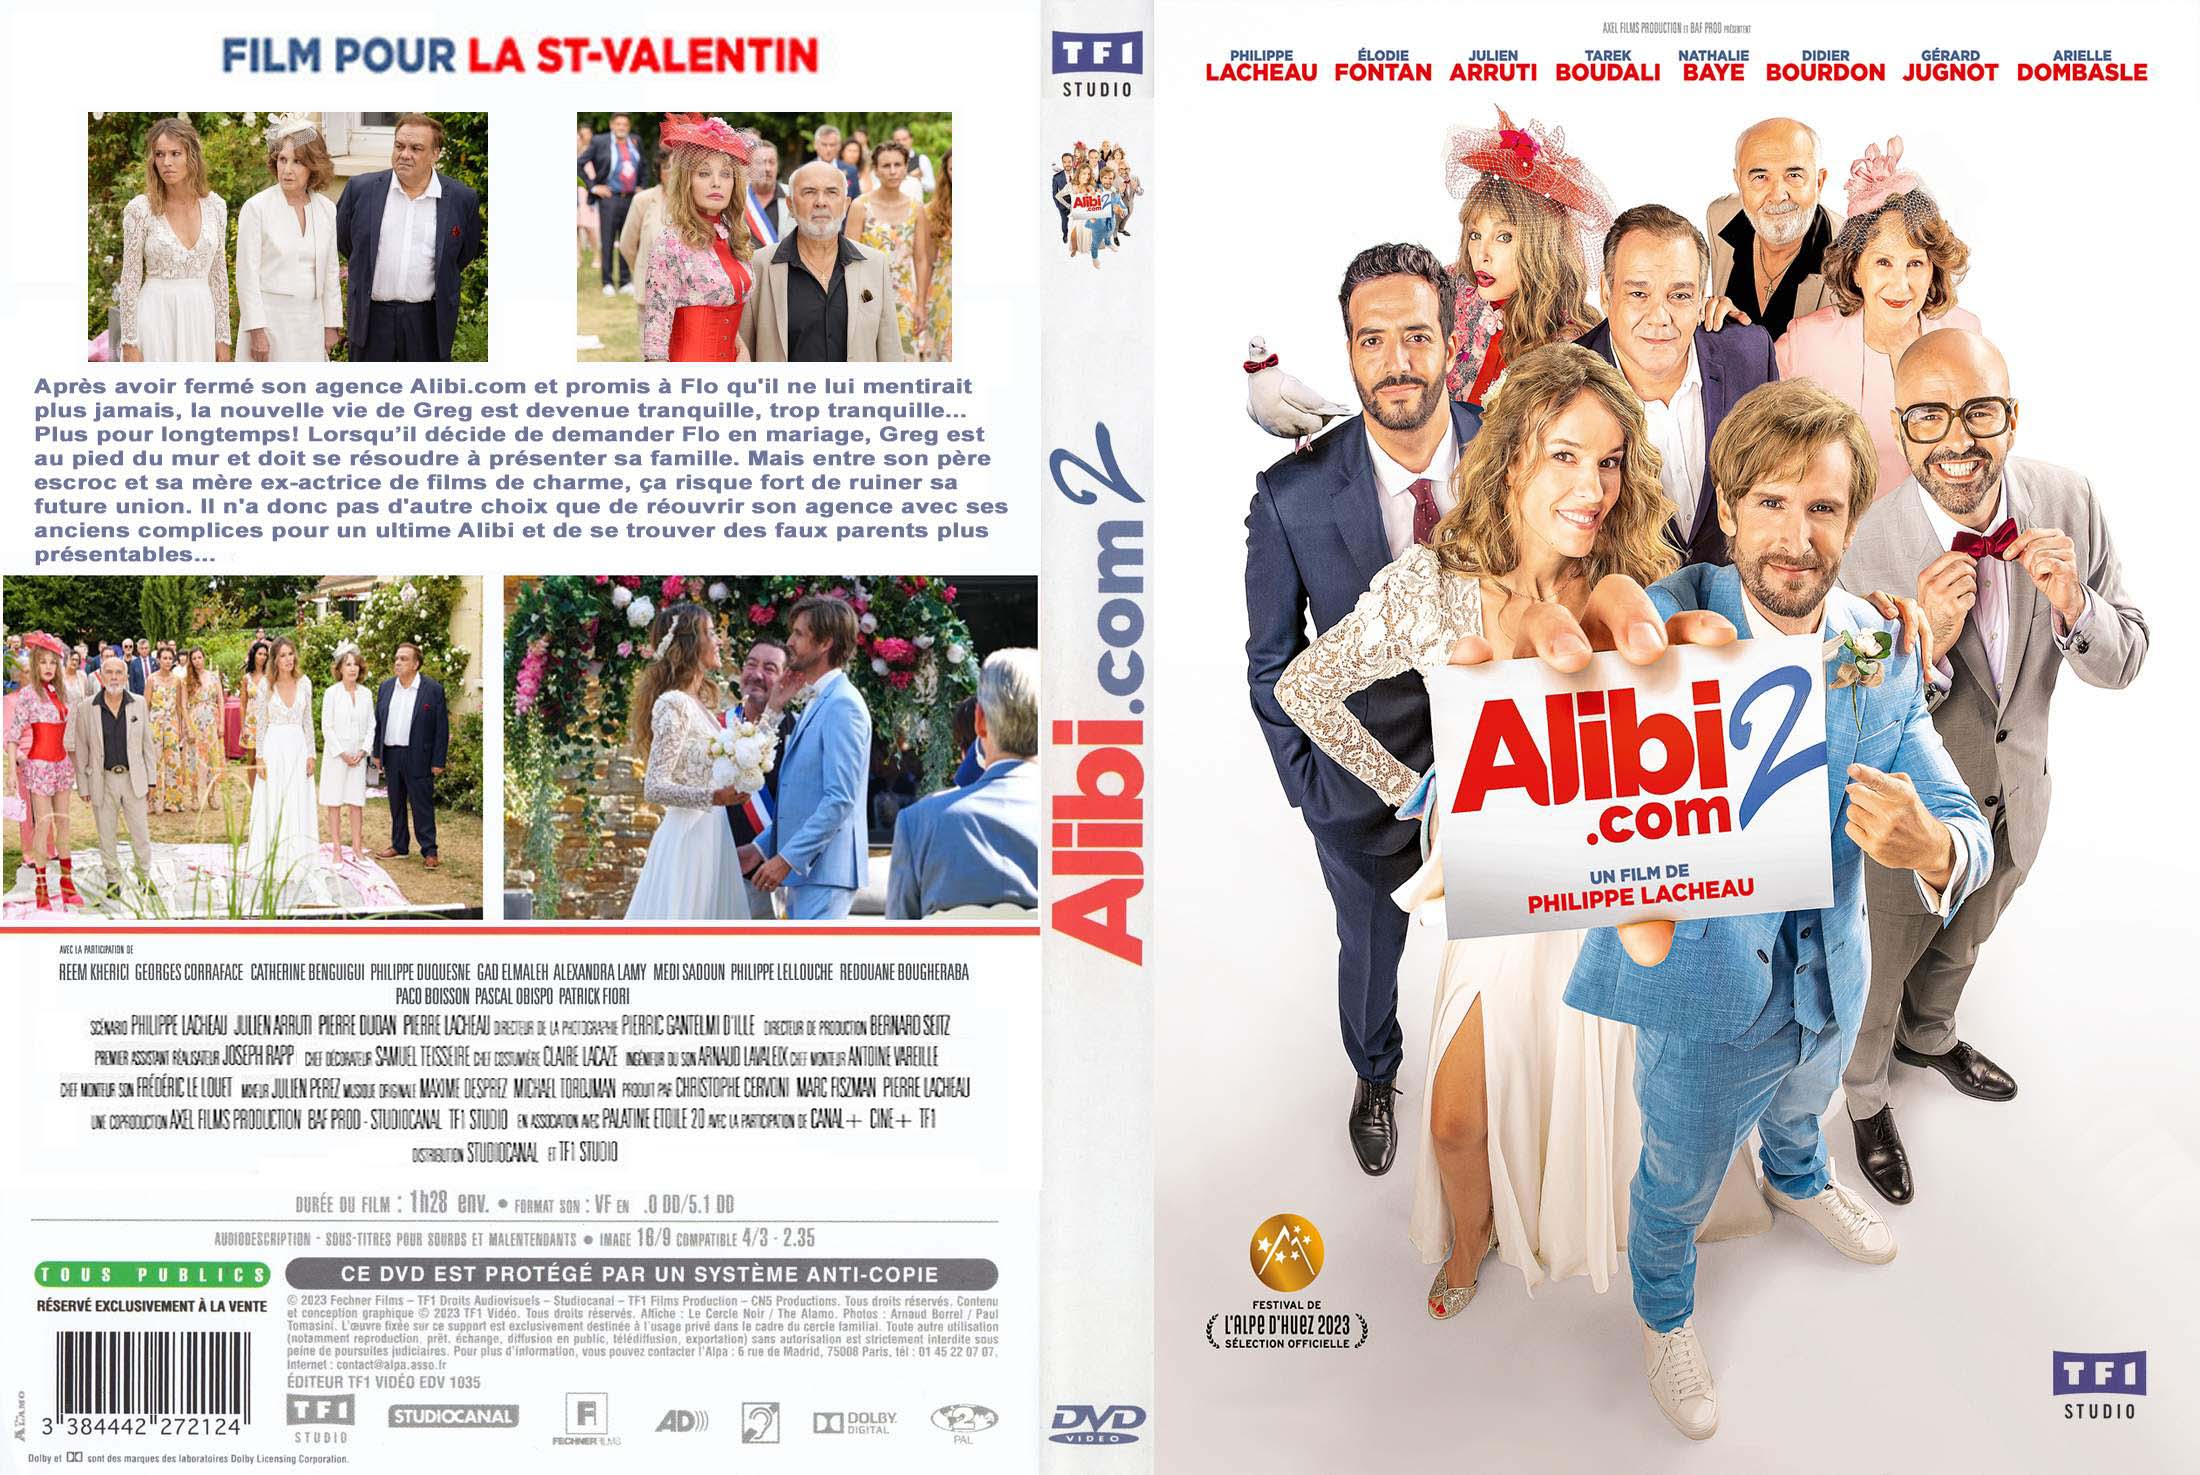 Jaquette DVD Alibi.com 2 custom